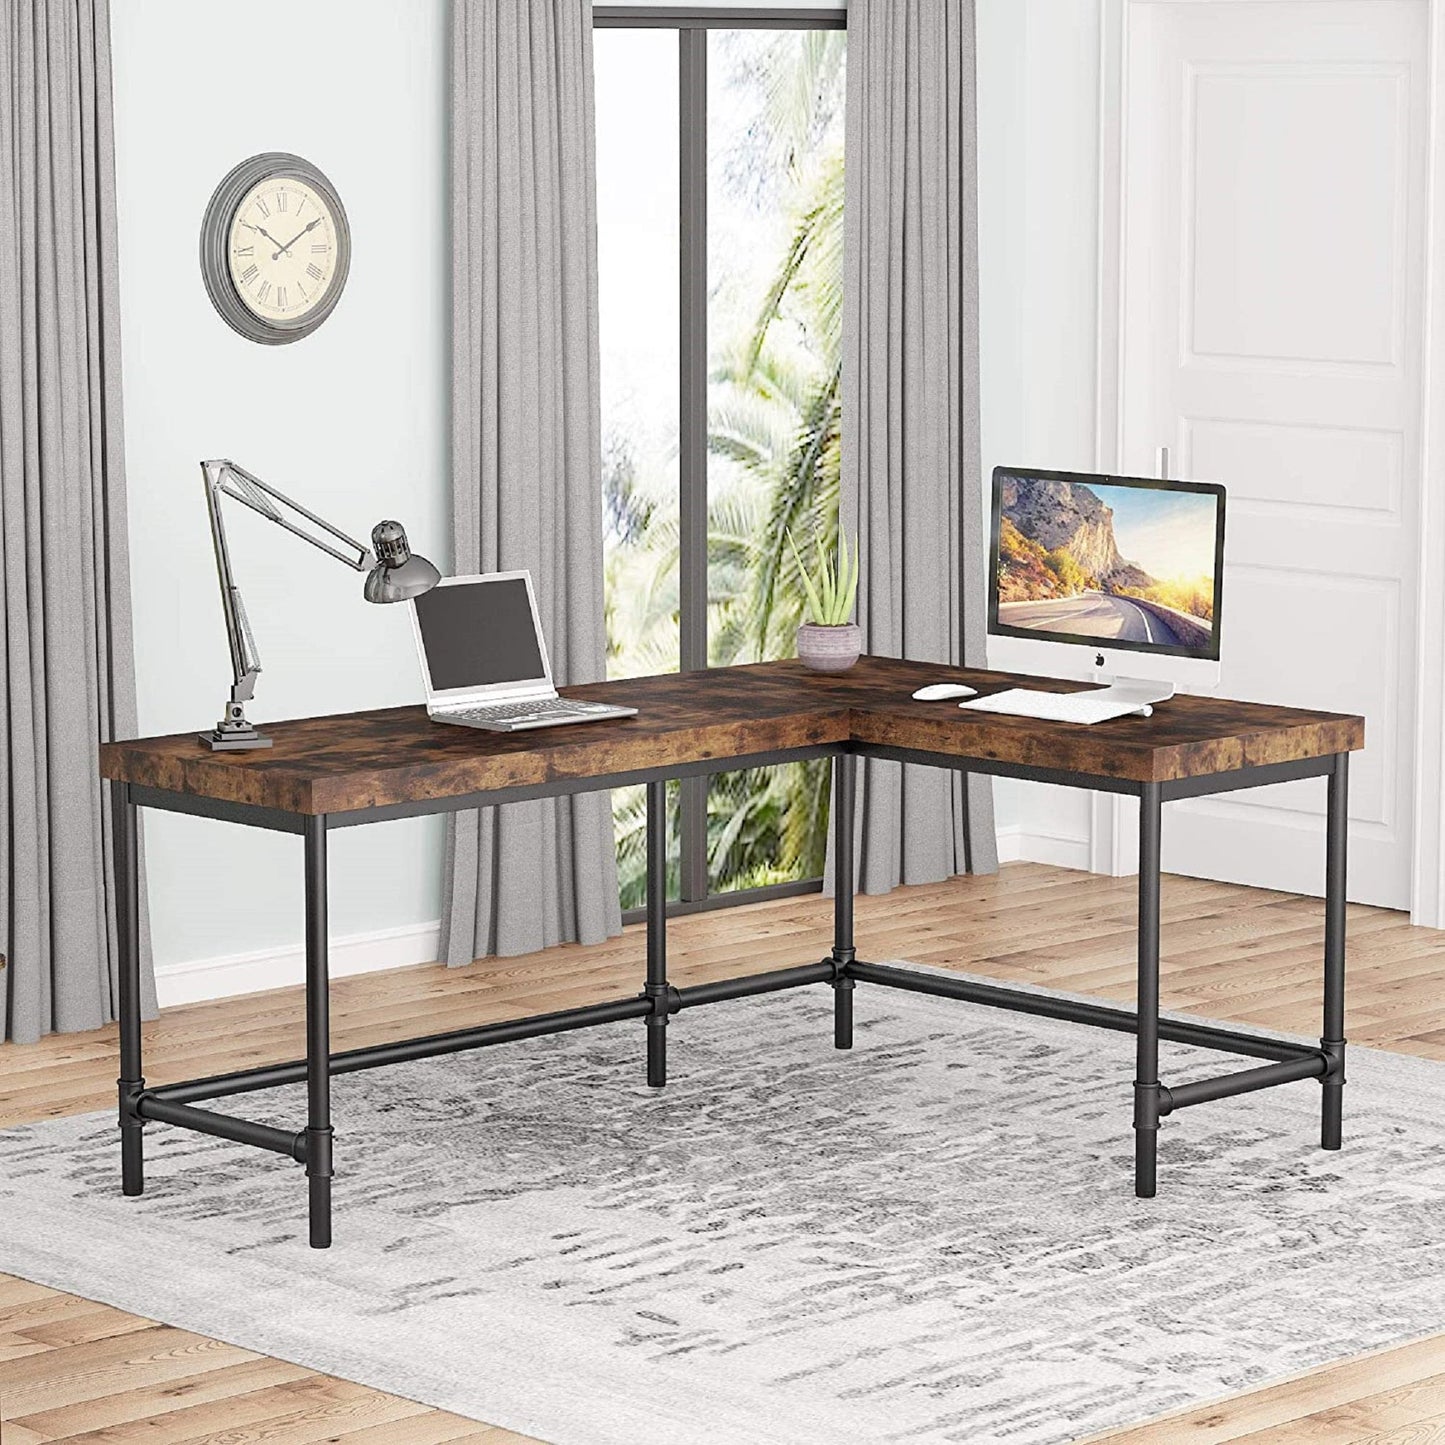 L-Shaped Desk, 67 inch Industrial Corner Computer Office Desk PC Laptop Study Table Workstation Modern Nordic